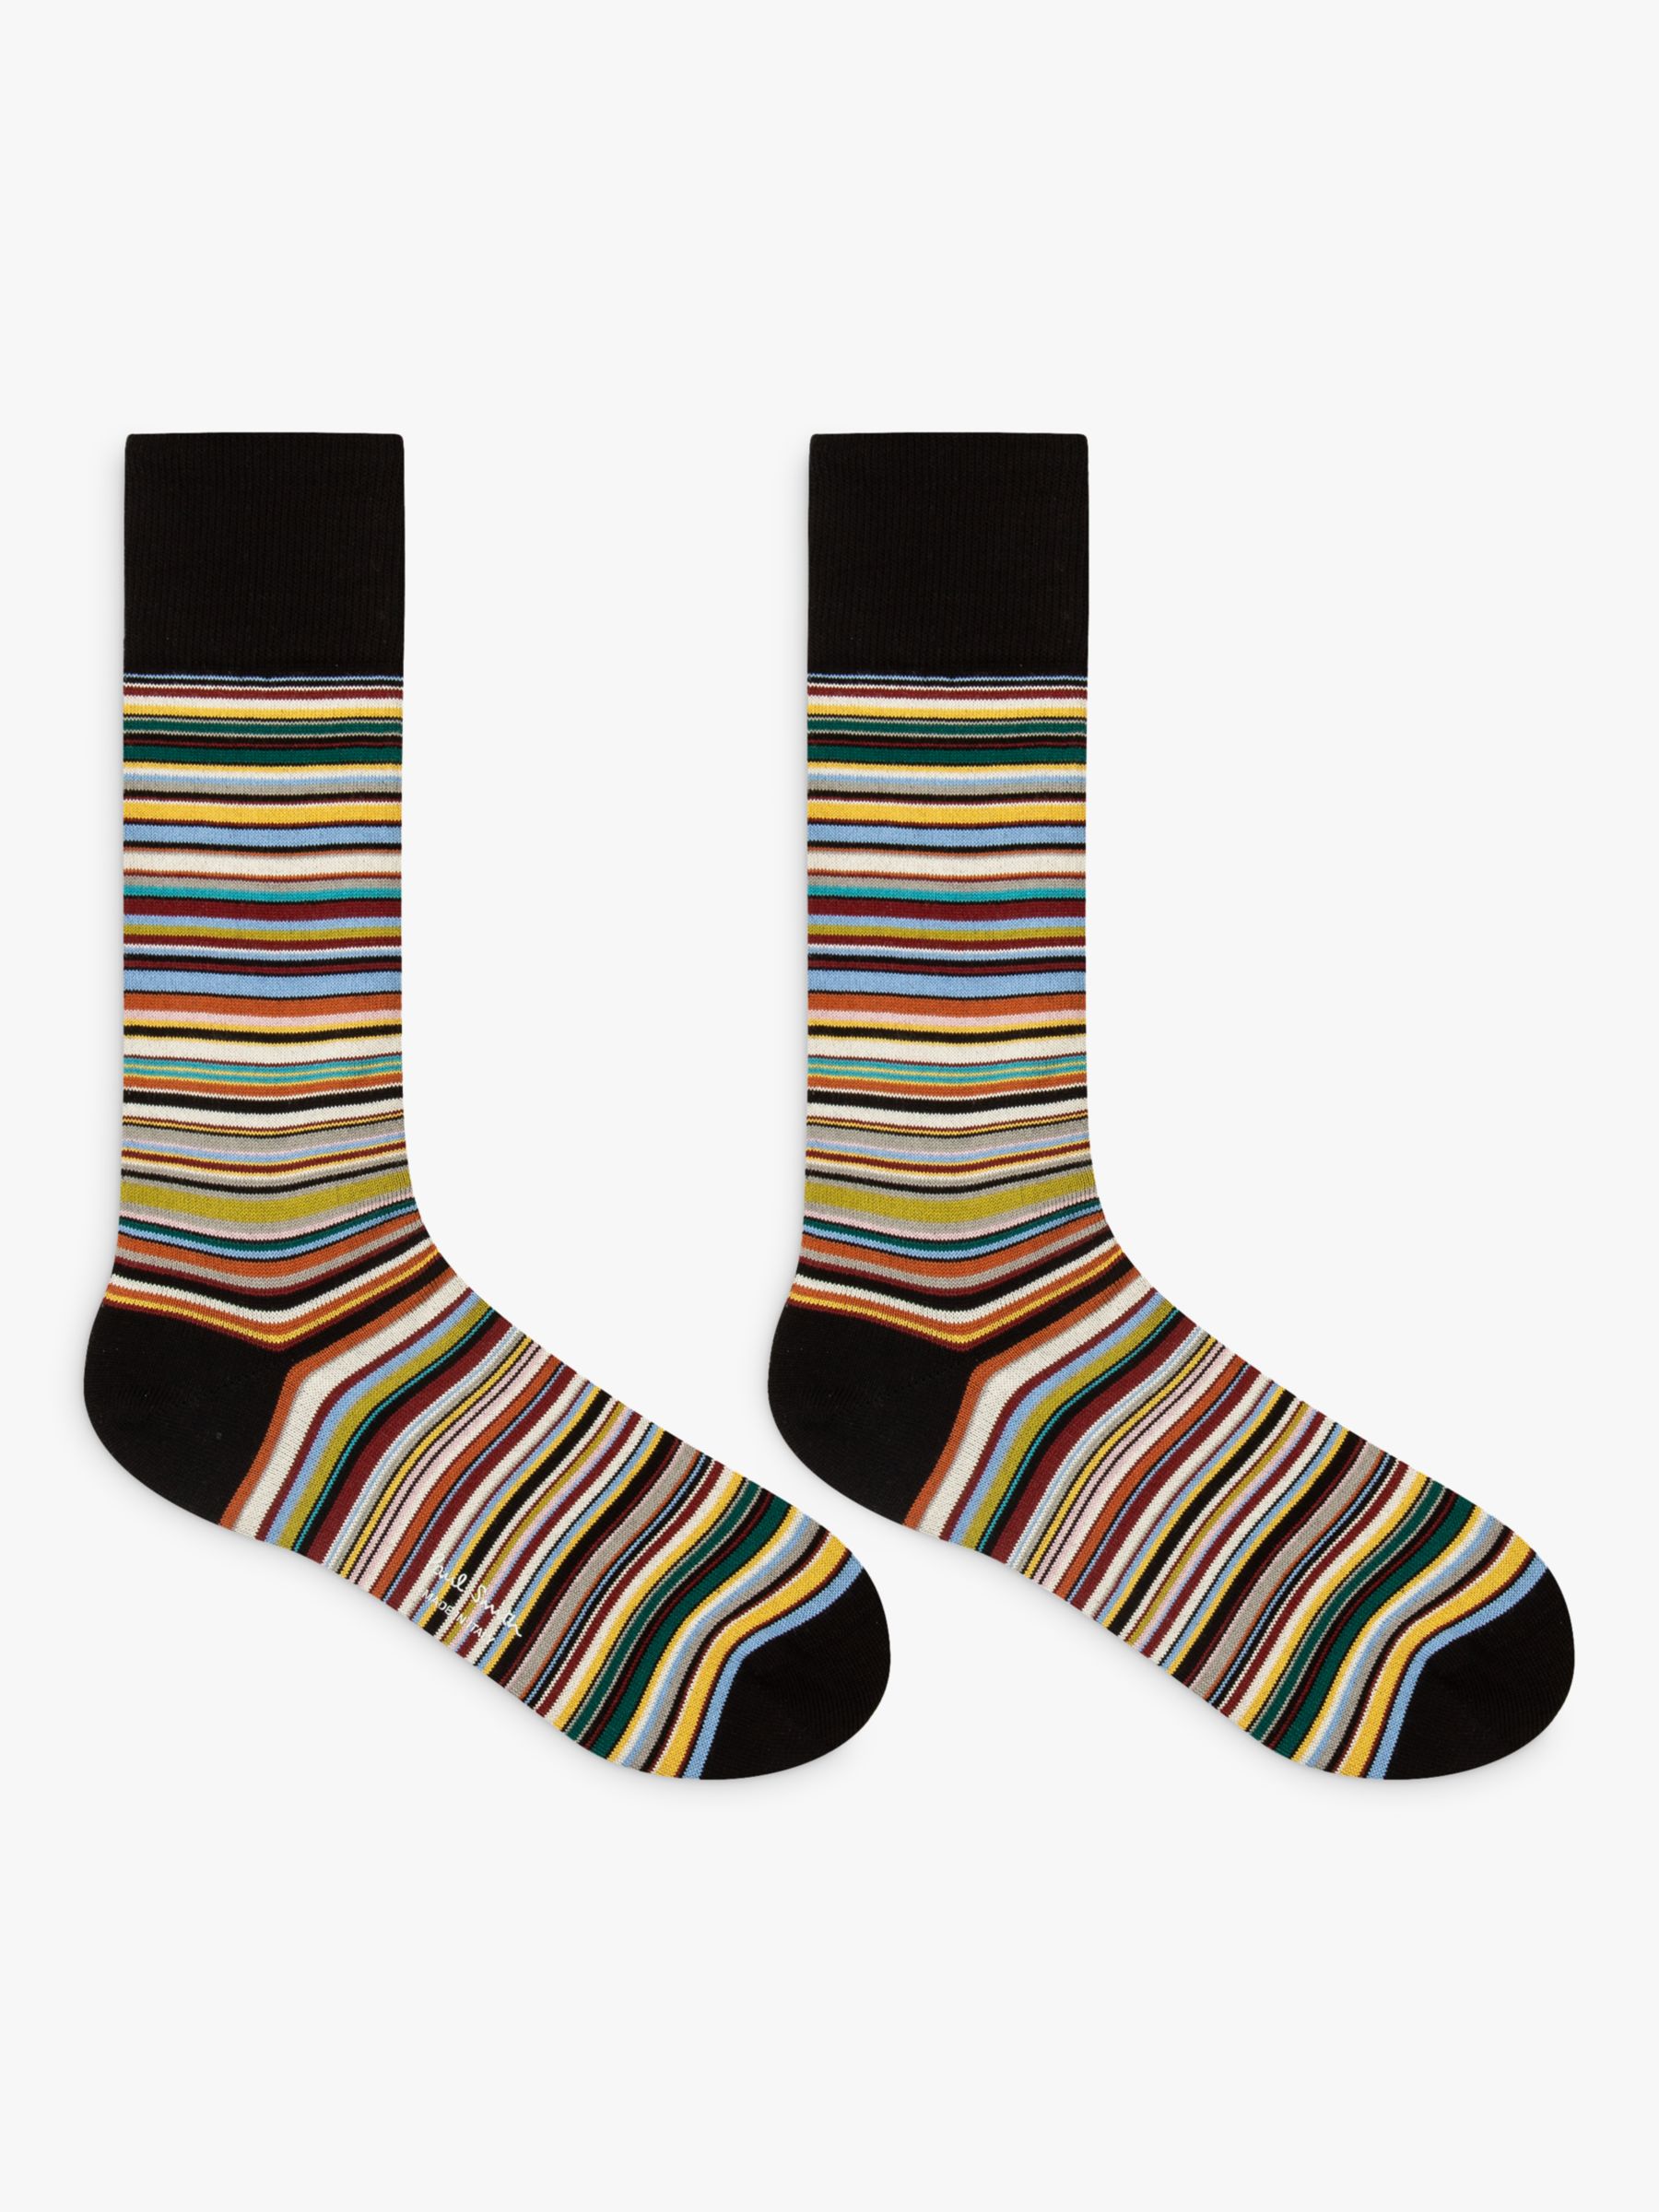 Paul Smith Signature Stripe Socks, Pack of 2, Multi